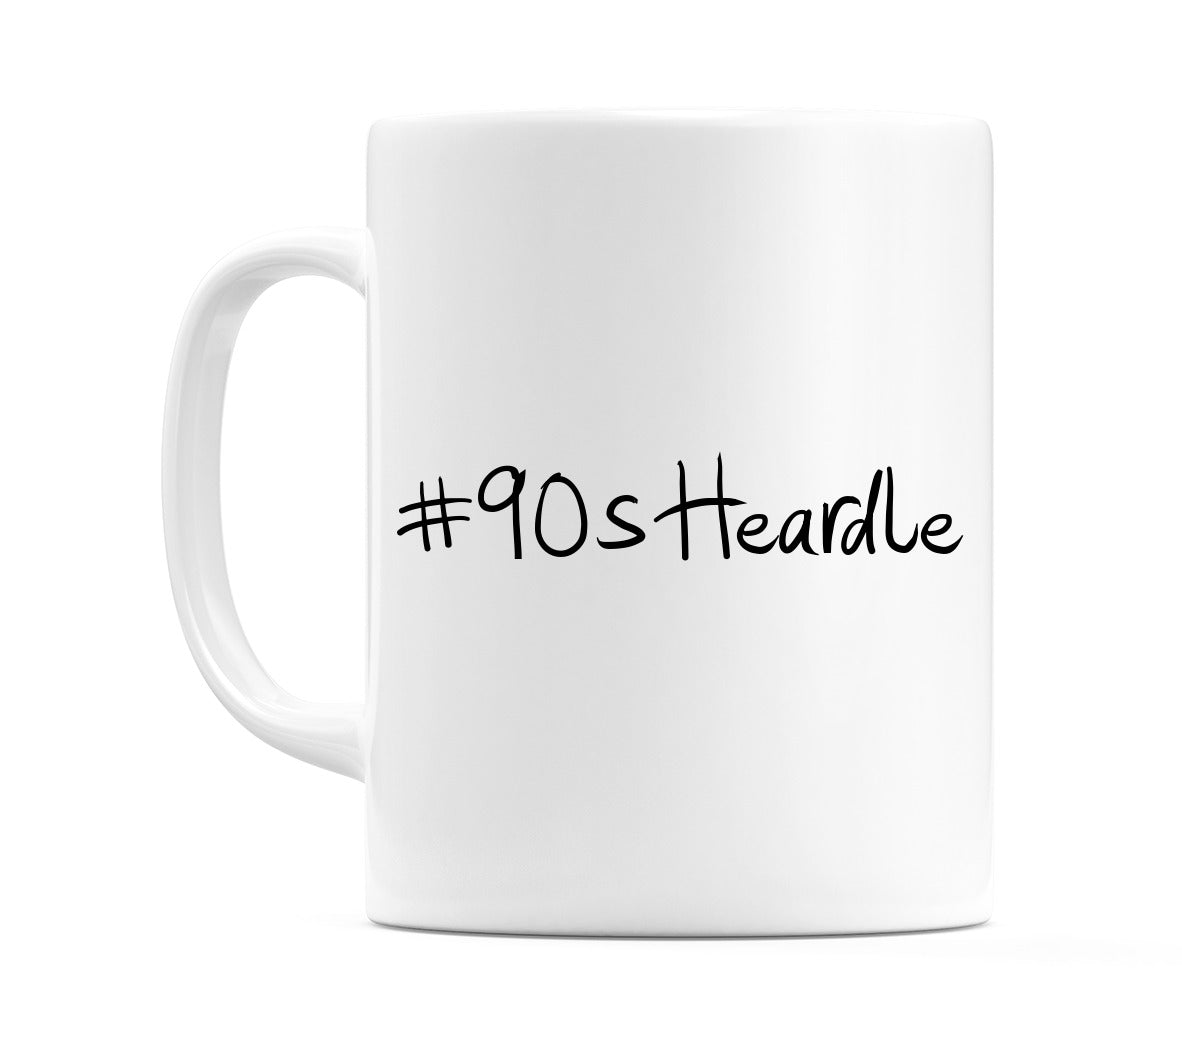 #90sHeardle Mug